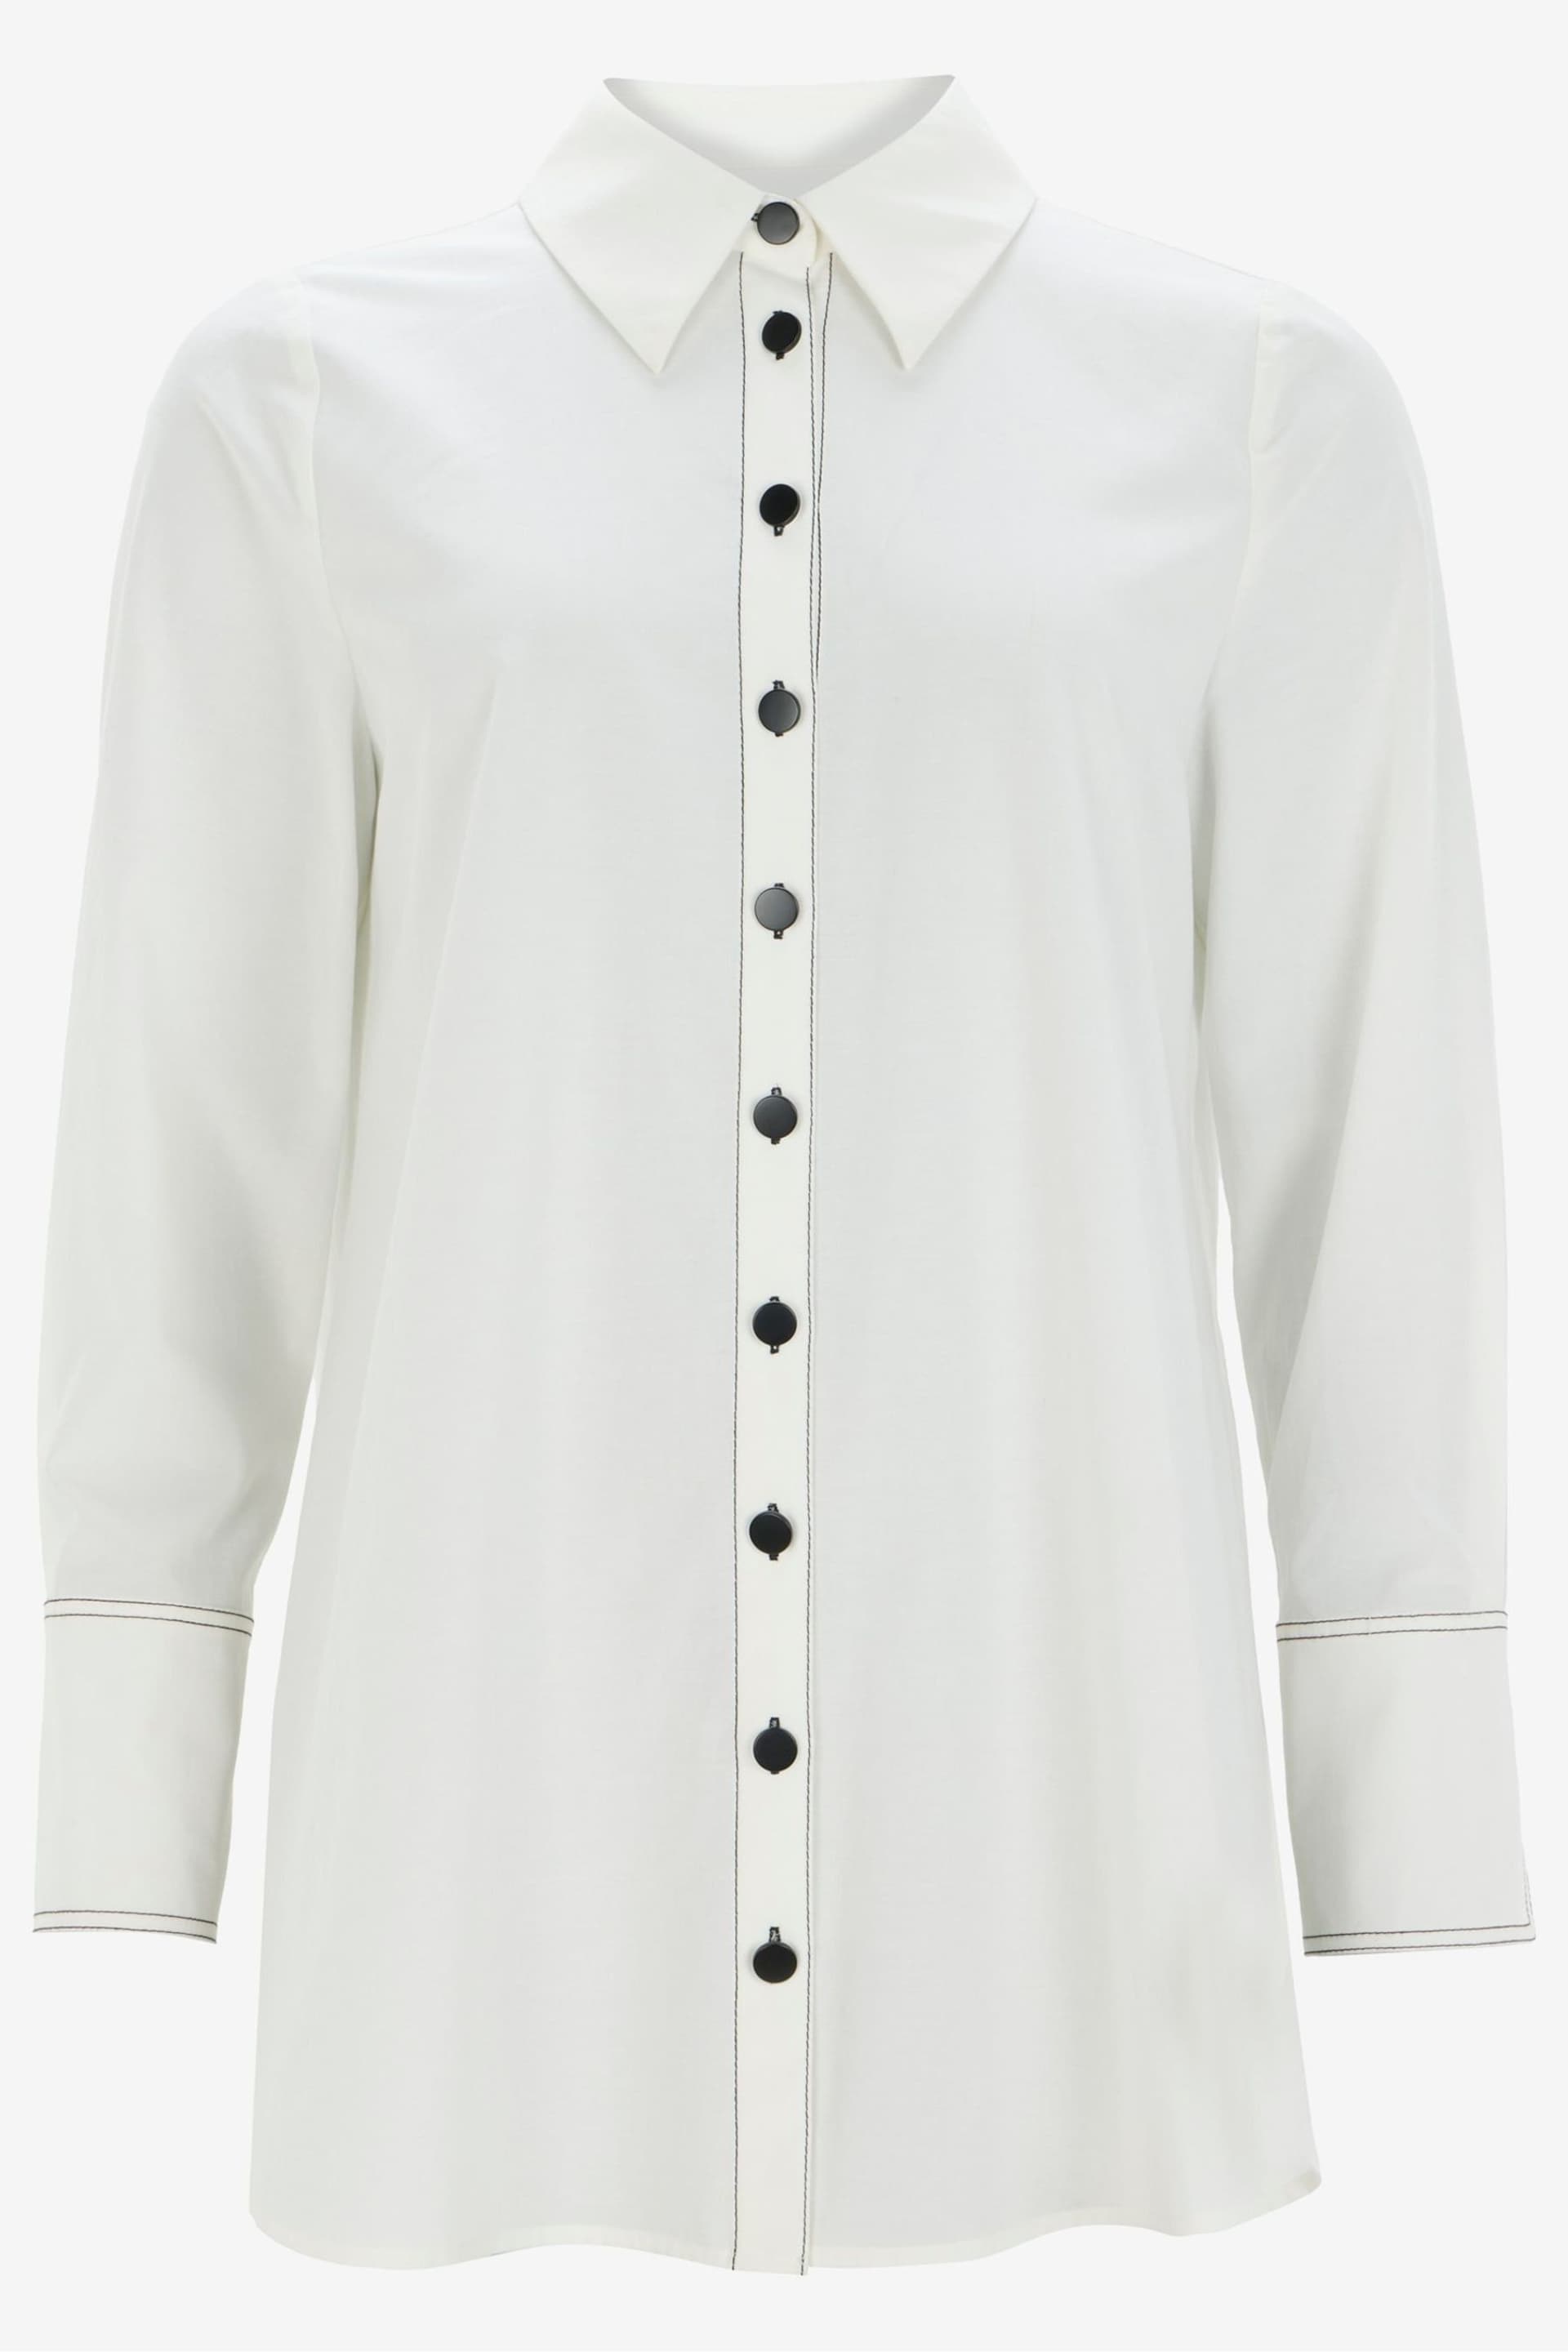 Mint Velvet White Contrast Stitch Shirt - Image 5 of 6